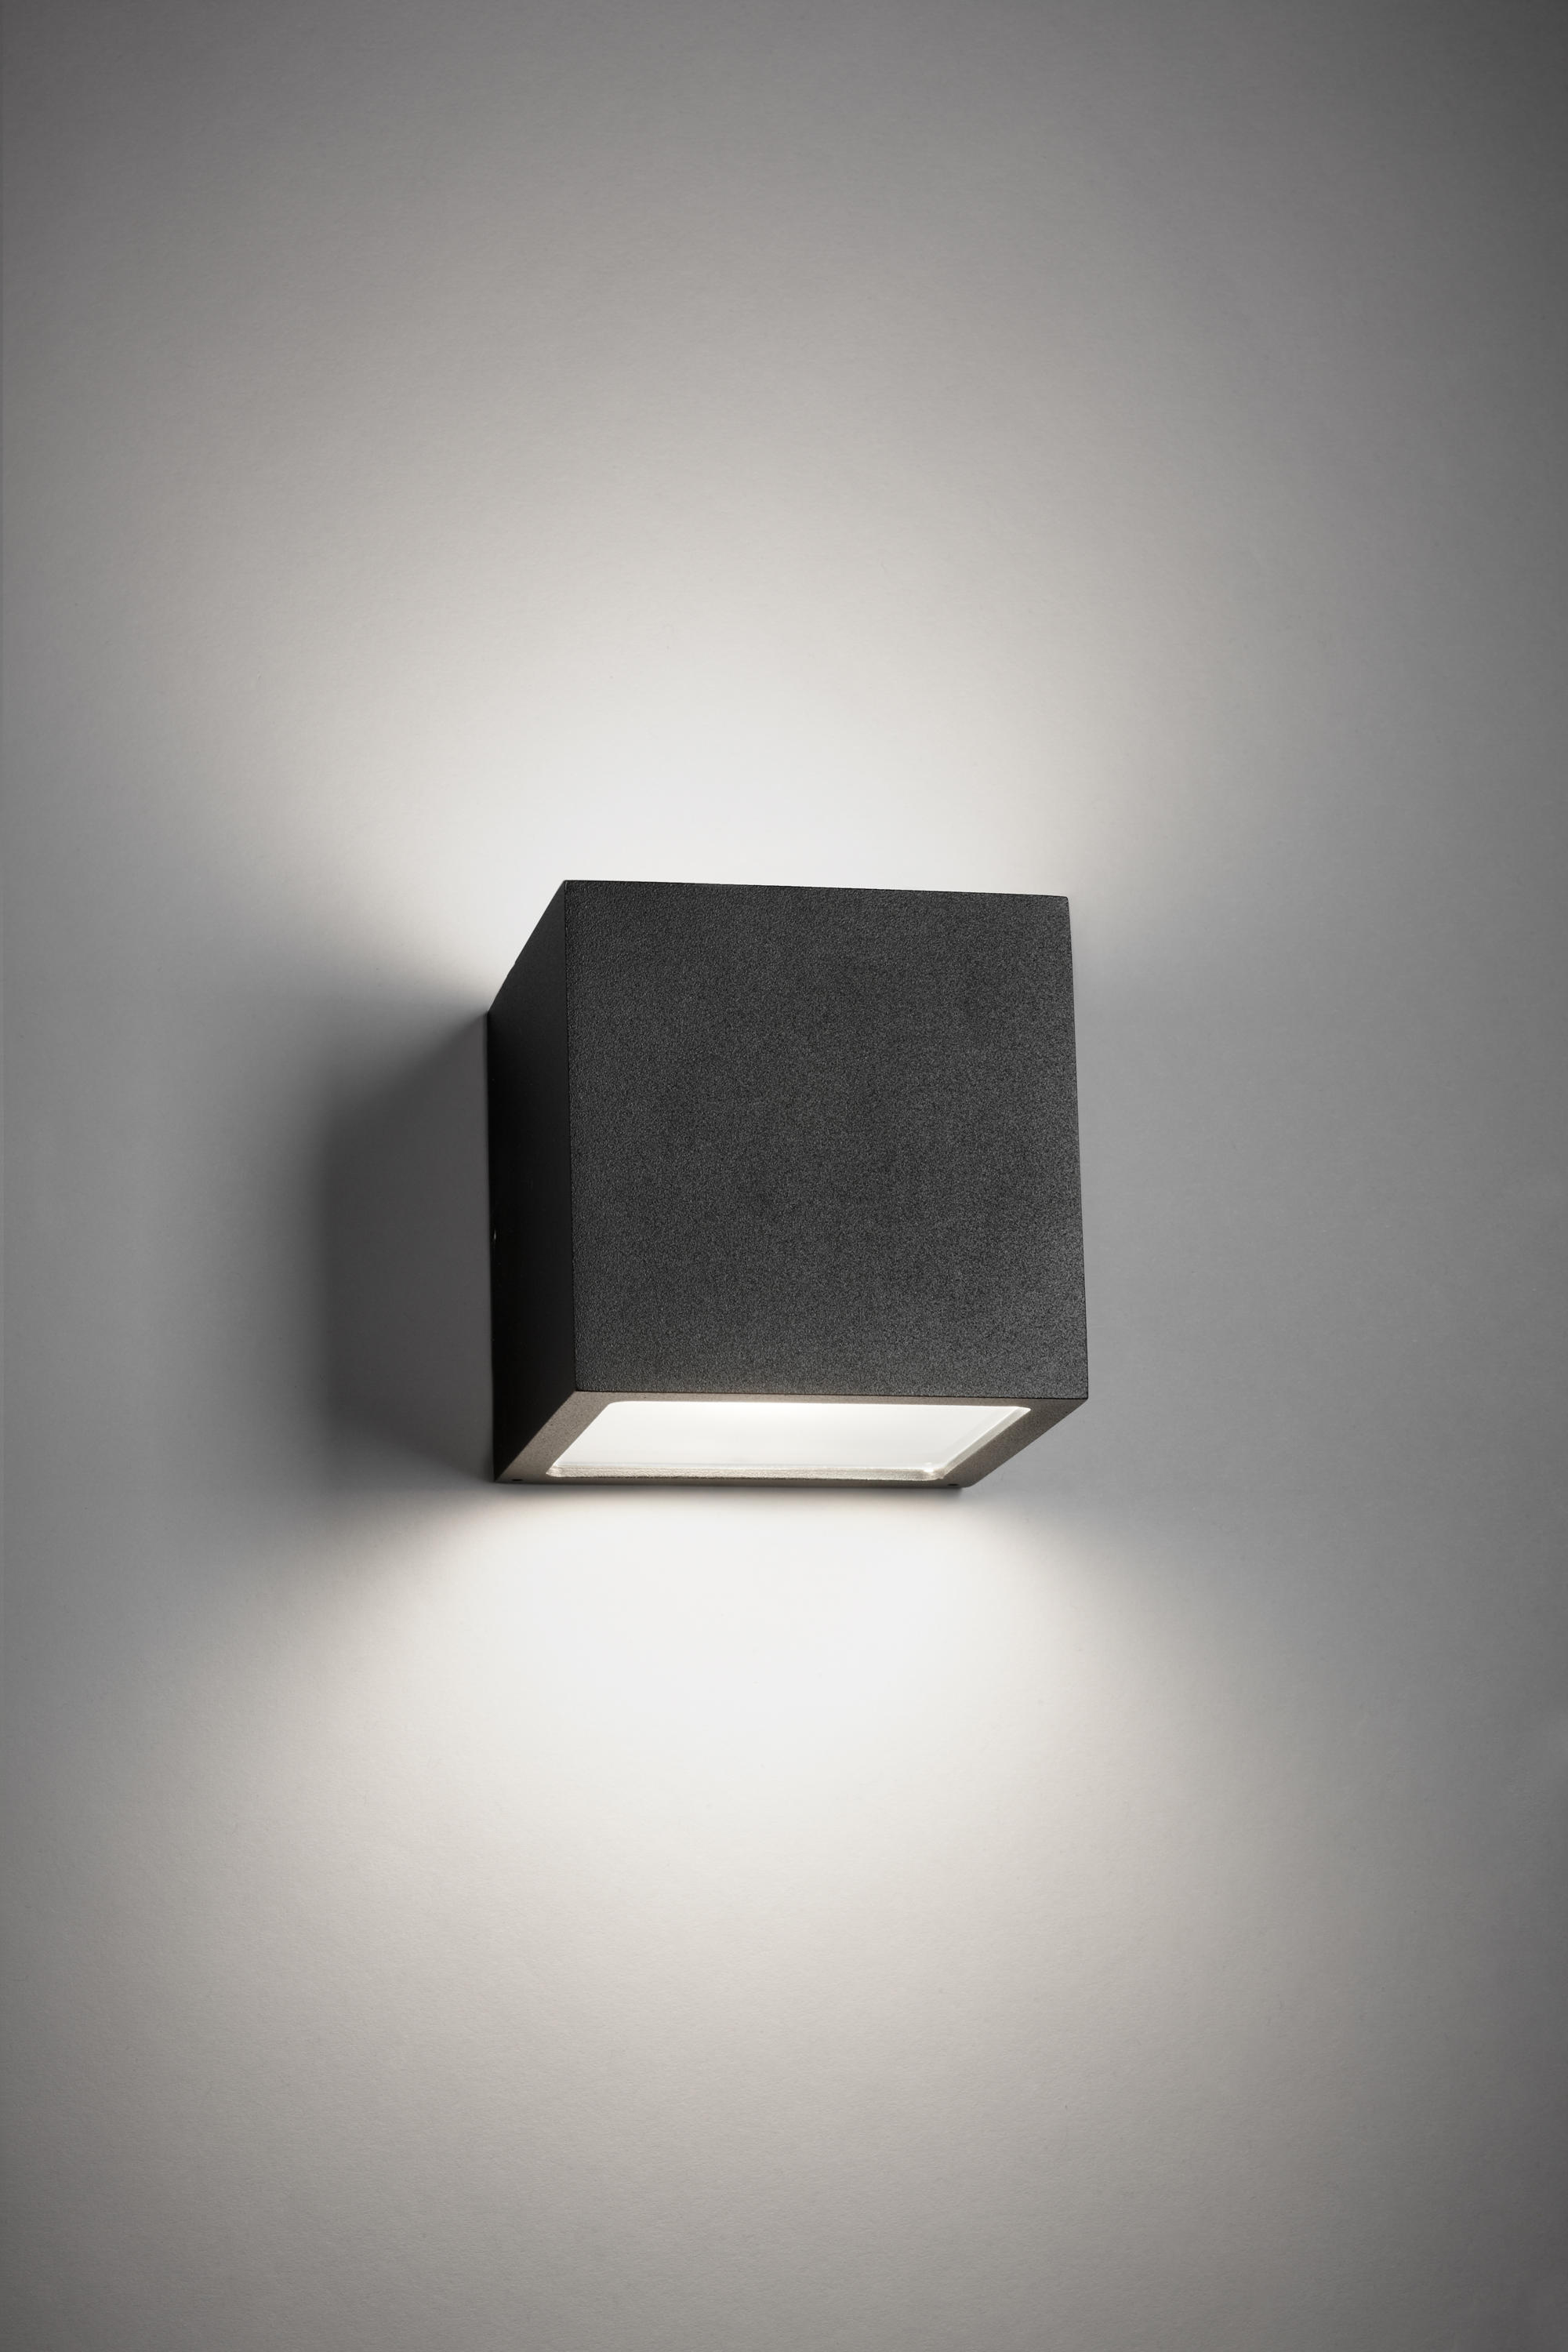 Светильник cube. Lightpoint светильник. Бра Ledolight point m122/1a. Бра collte Cube.